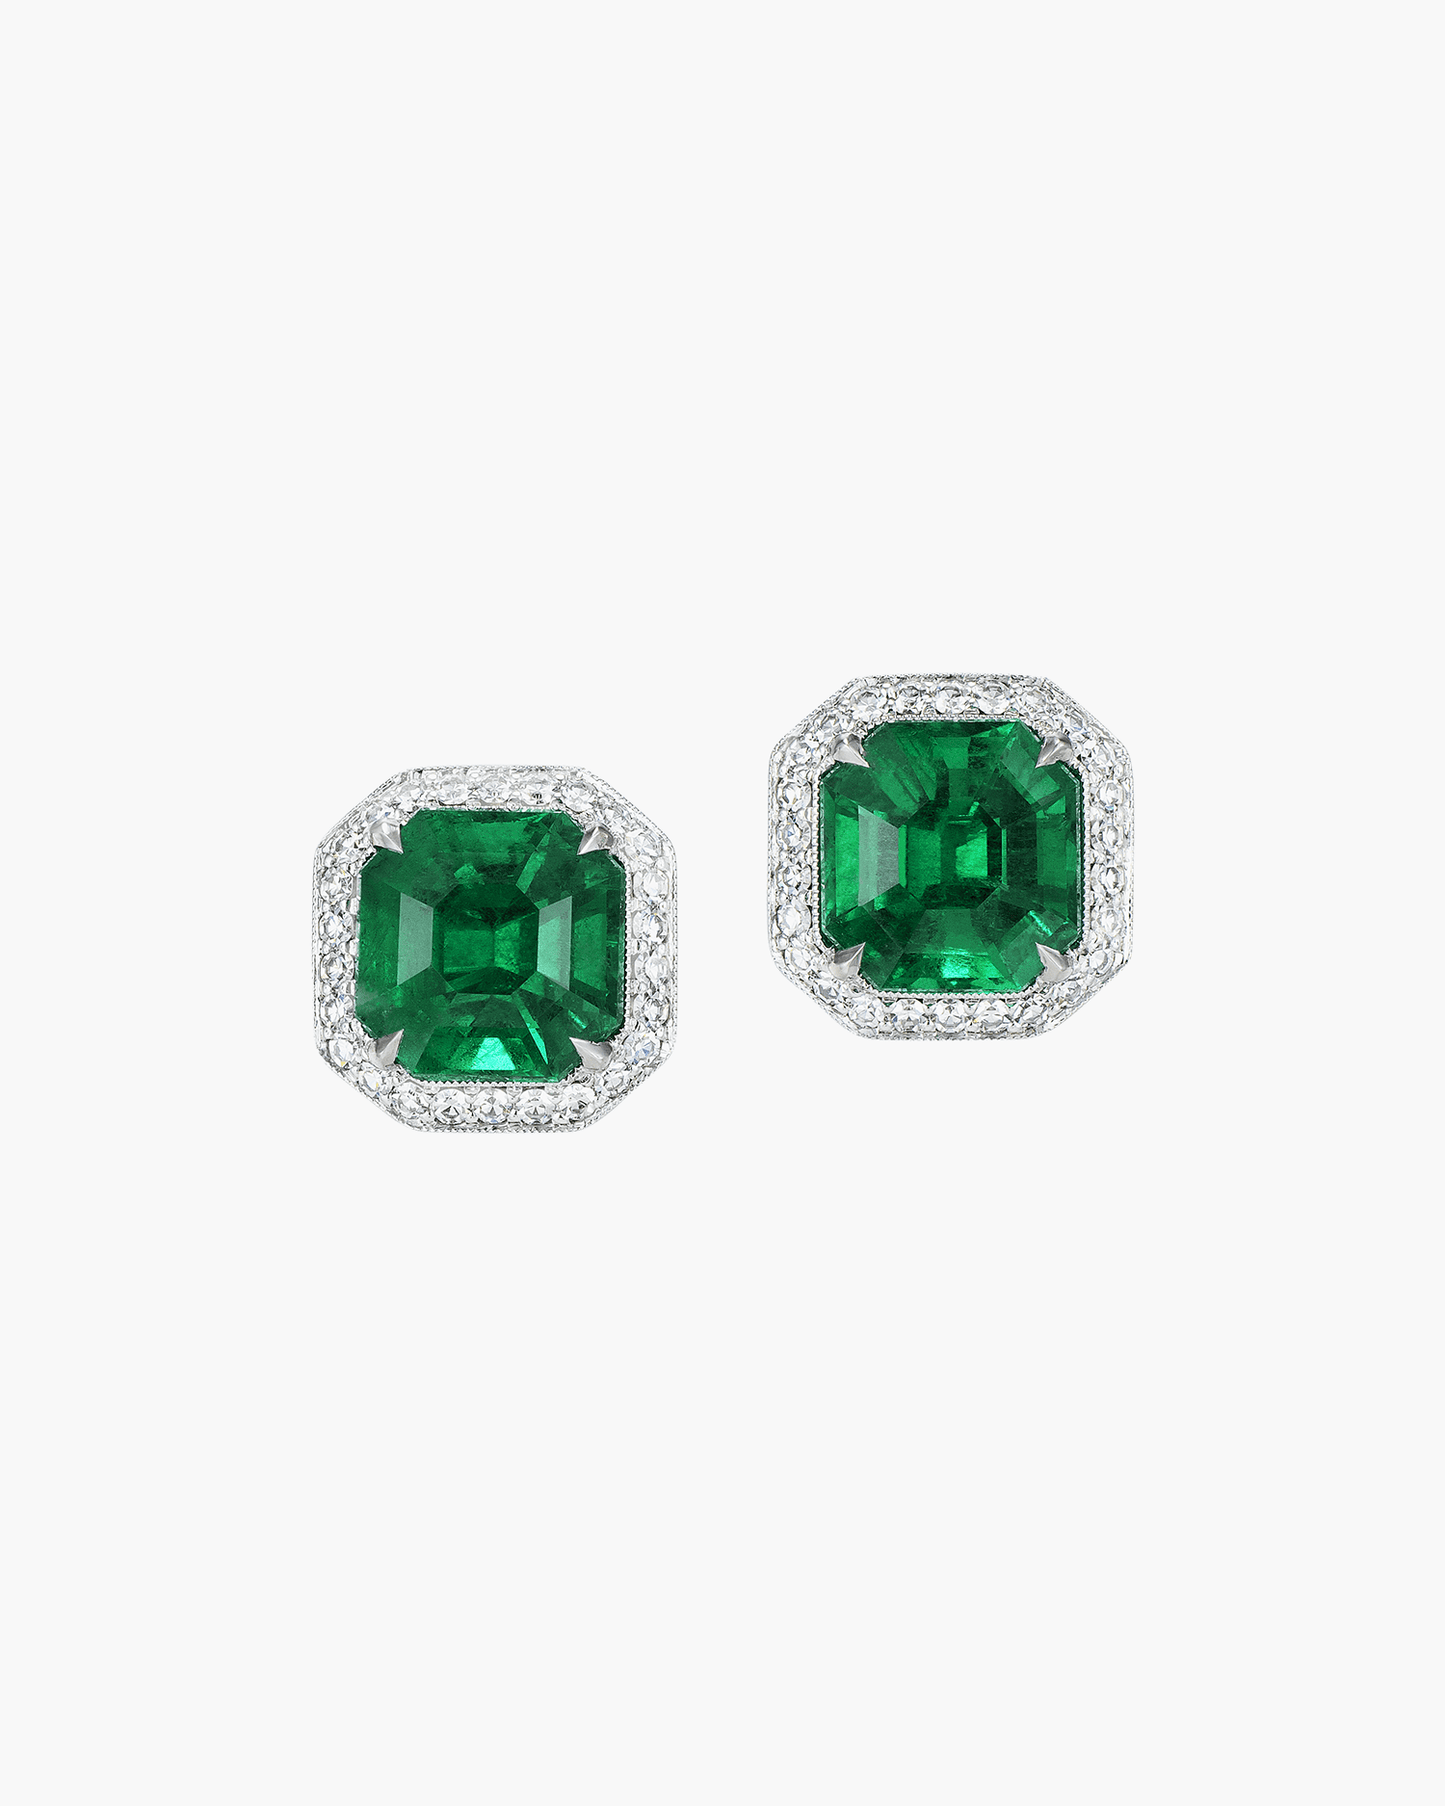 5.37 carat Emerald Cut Colombian Emerald and Diamond Ear Studs